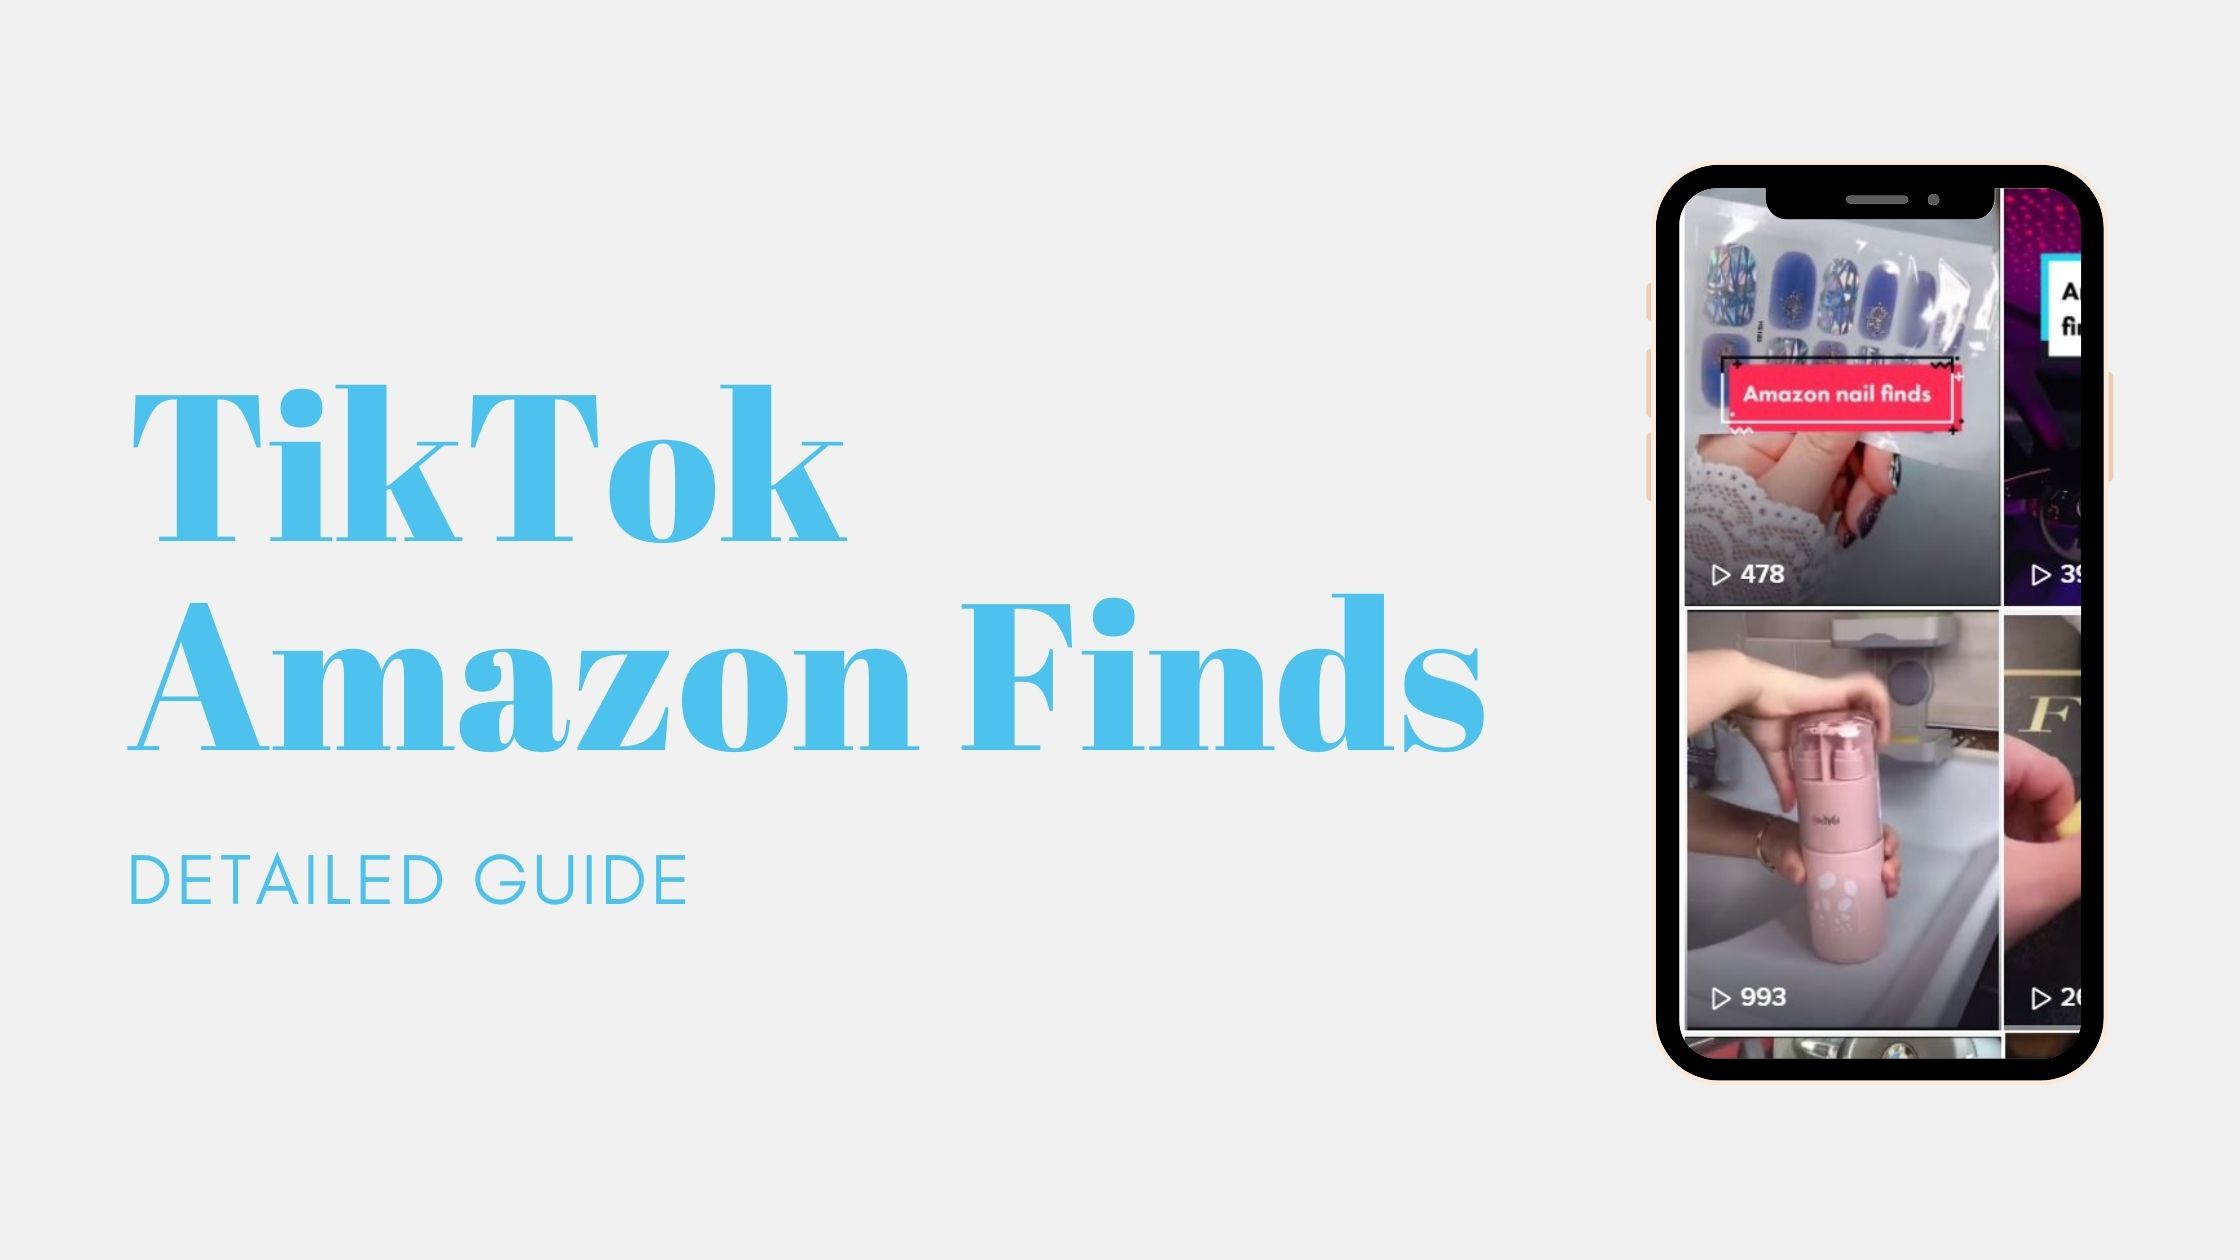 60 TikTok Amazon Finds